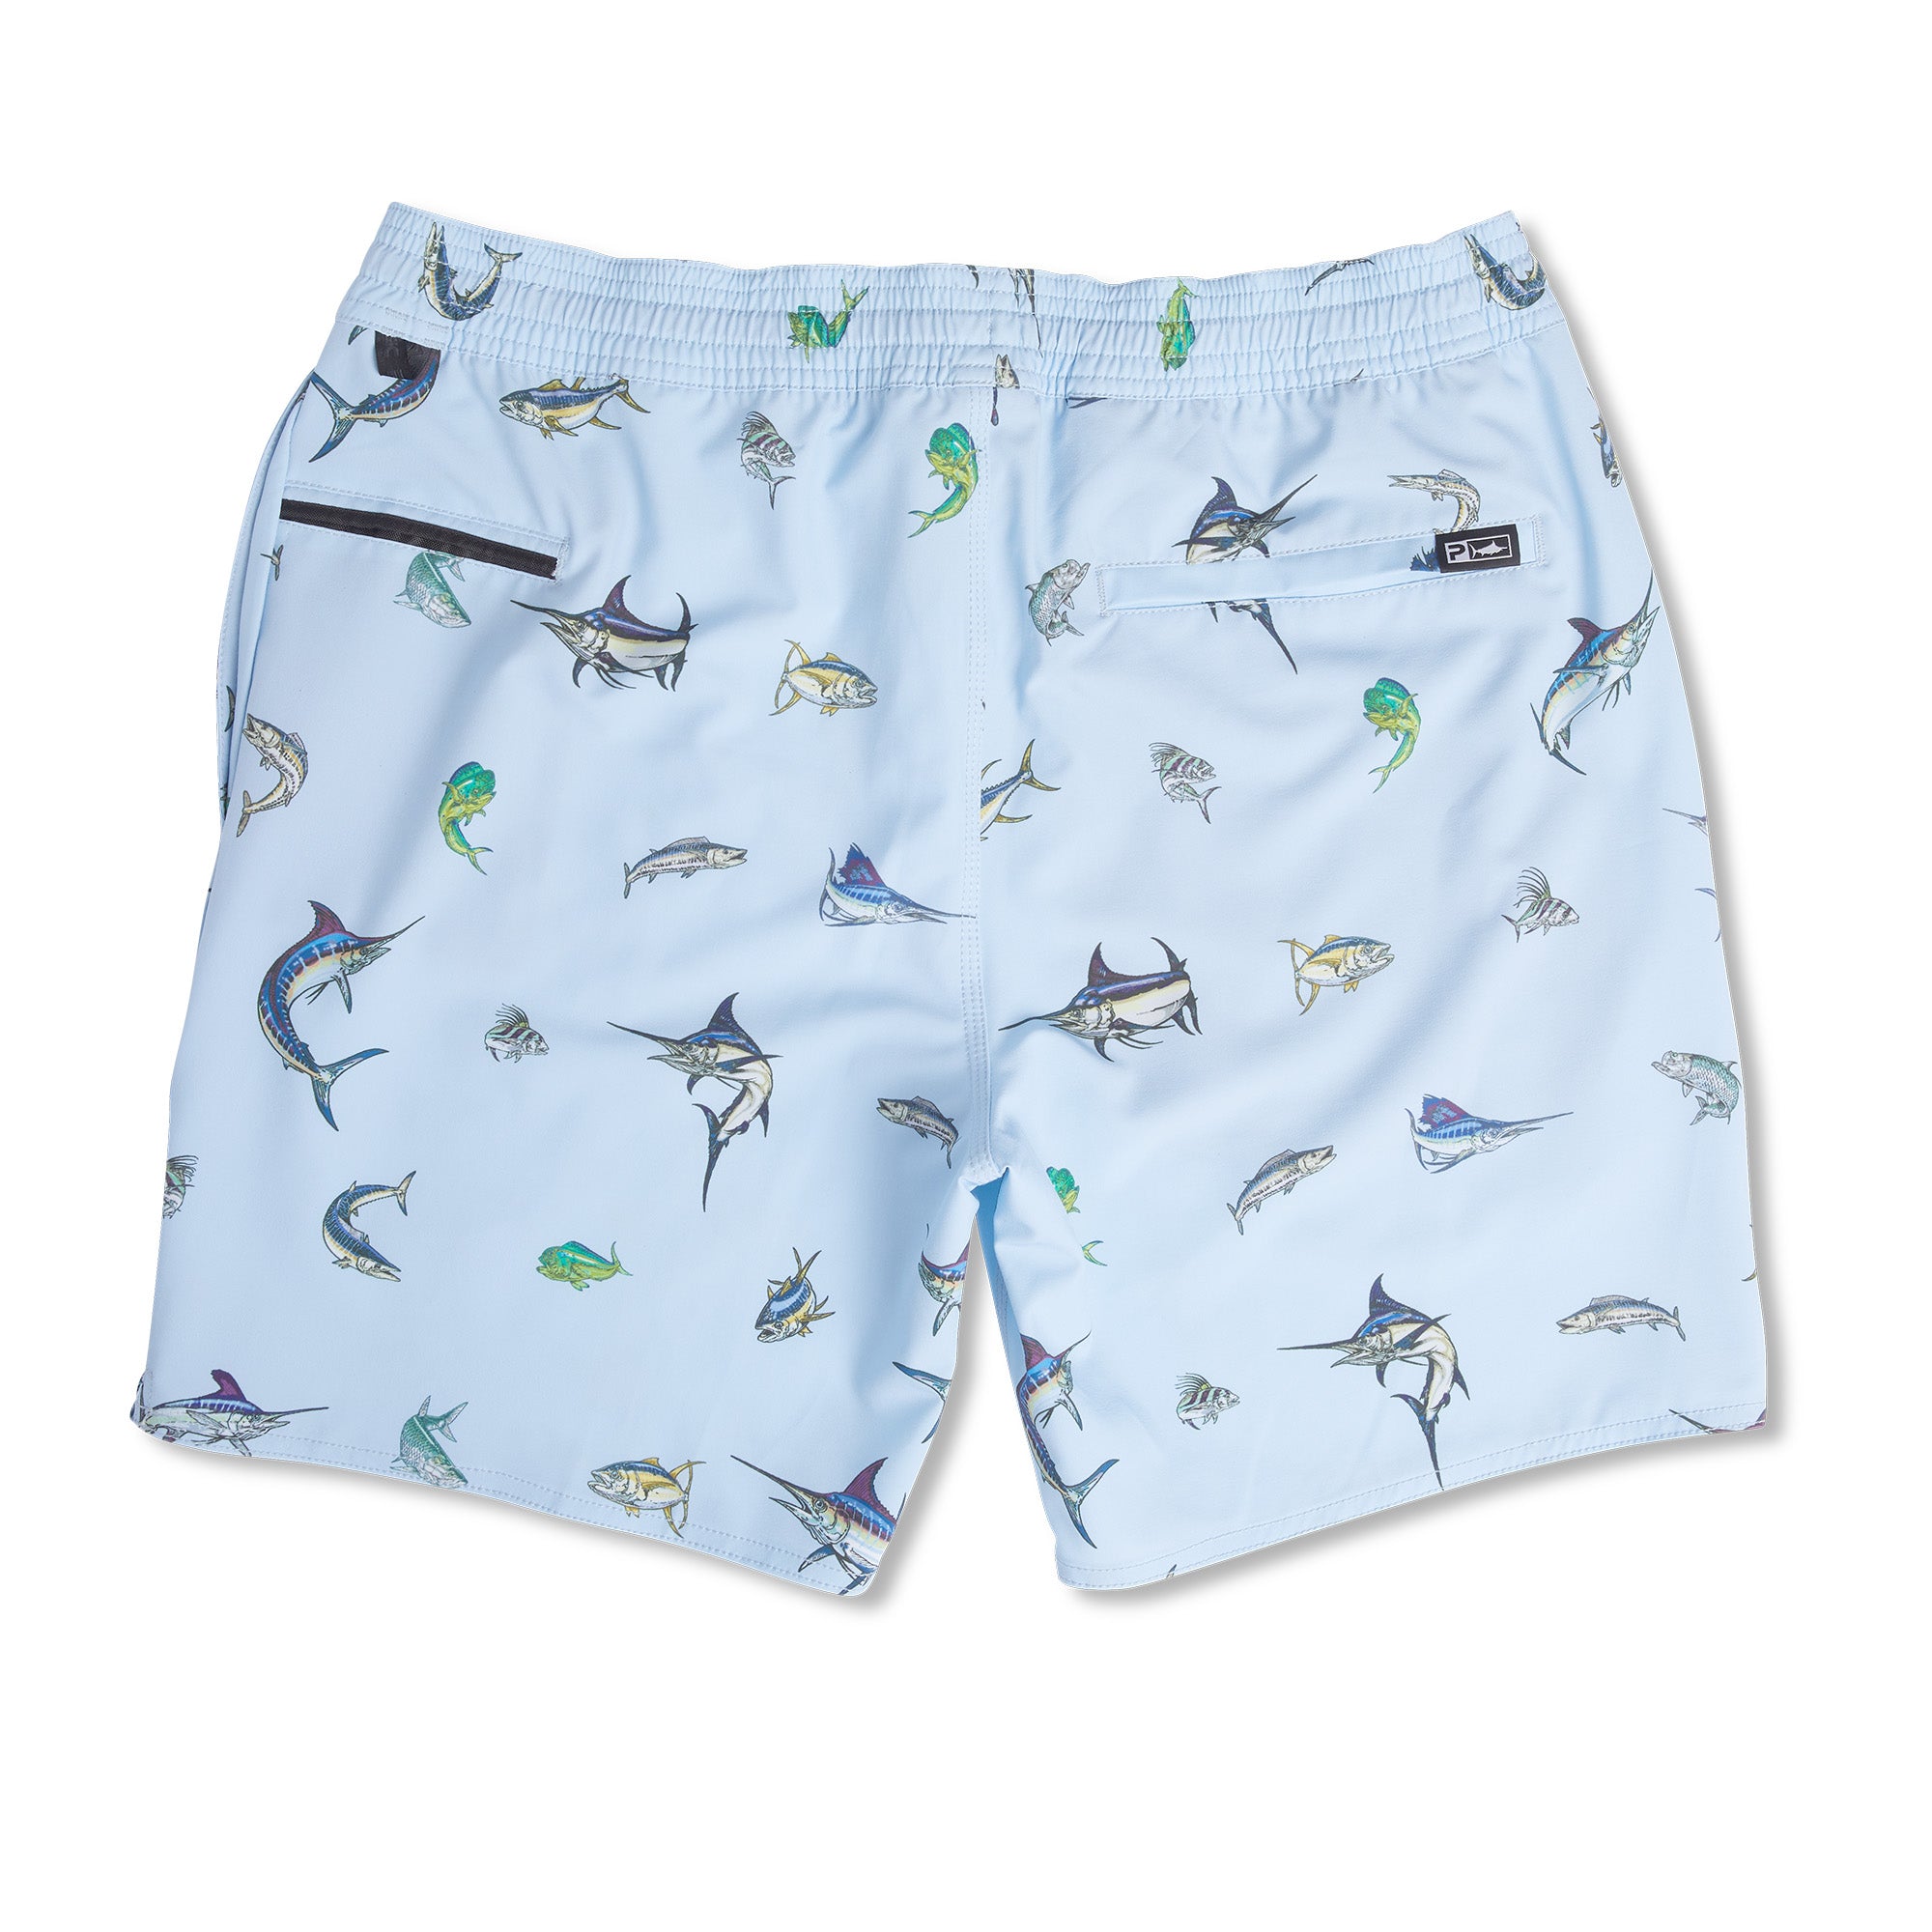 Pelagic fishing shorts mens - Gem